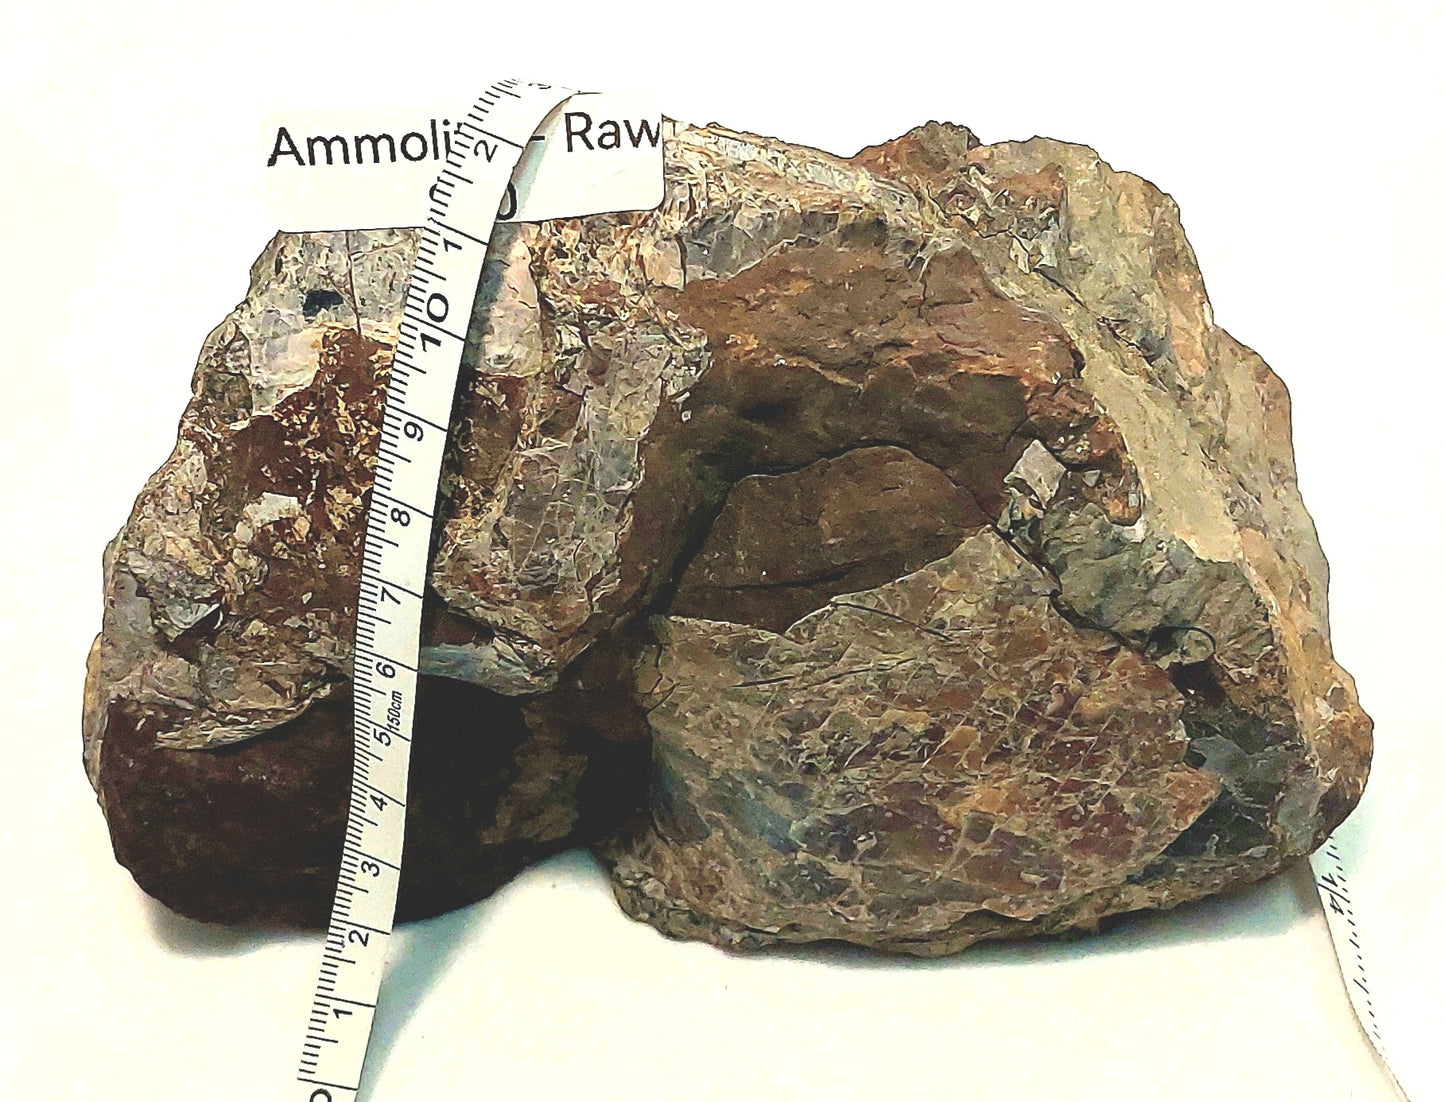 Raw Ammolite